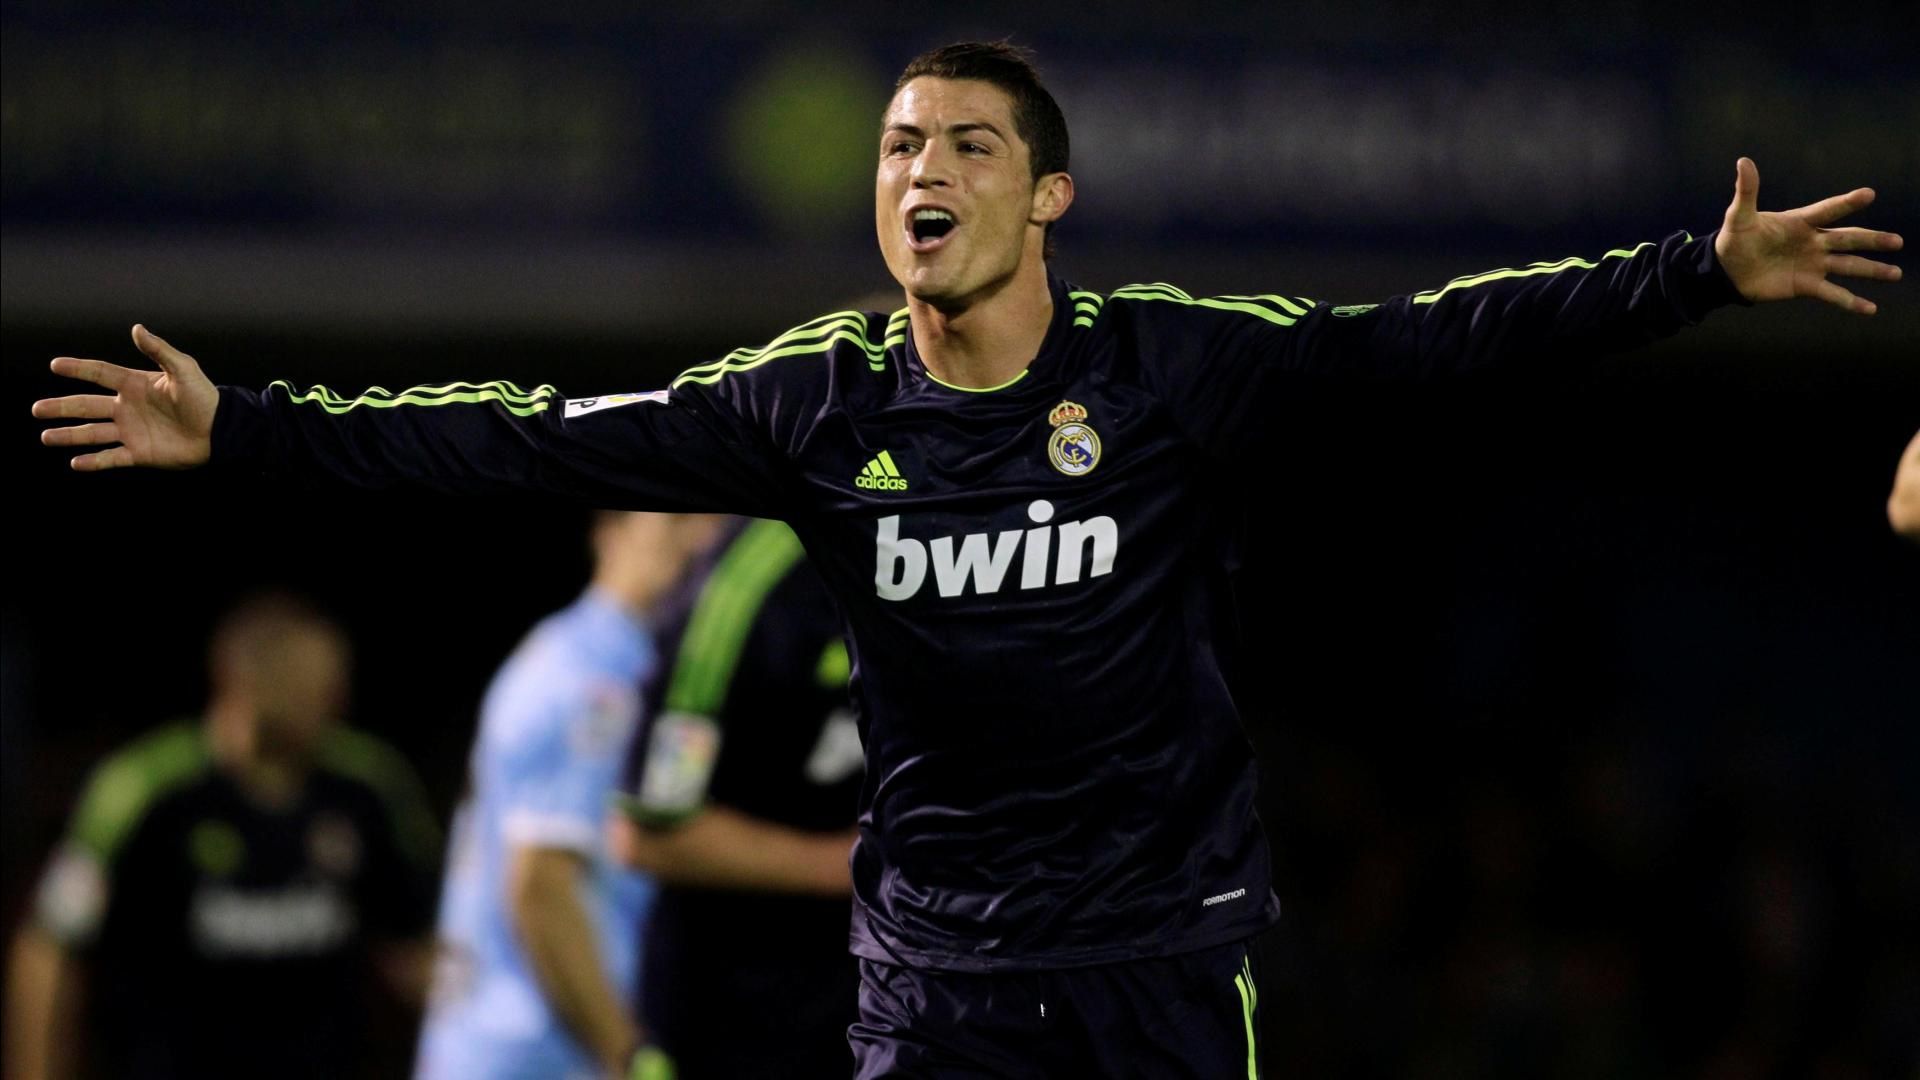 Cristiano Ronaldo celebrating a goal wallpaper Ronaldo